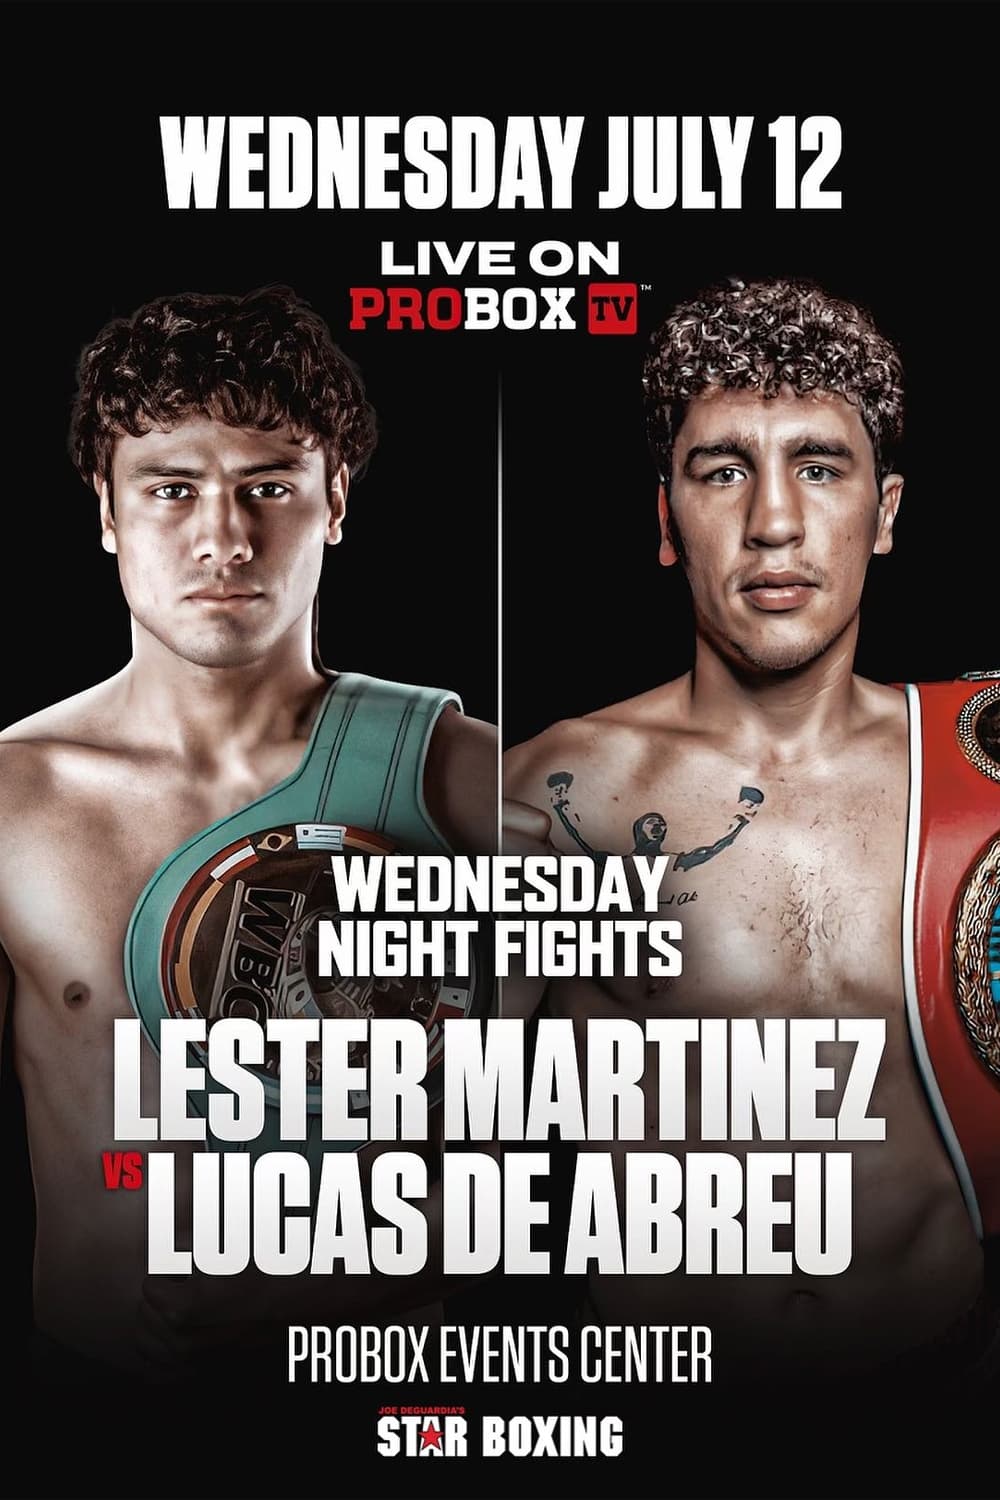 Lester Martinez vs. Lucas de Abreu